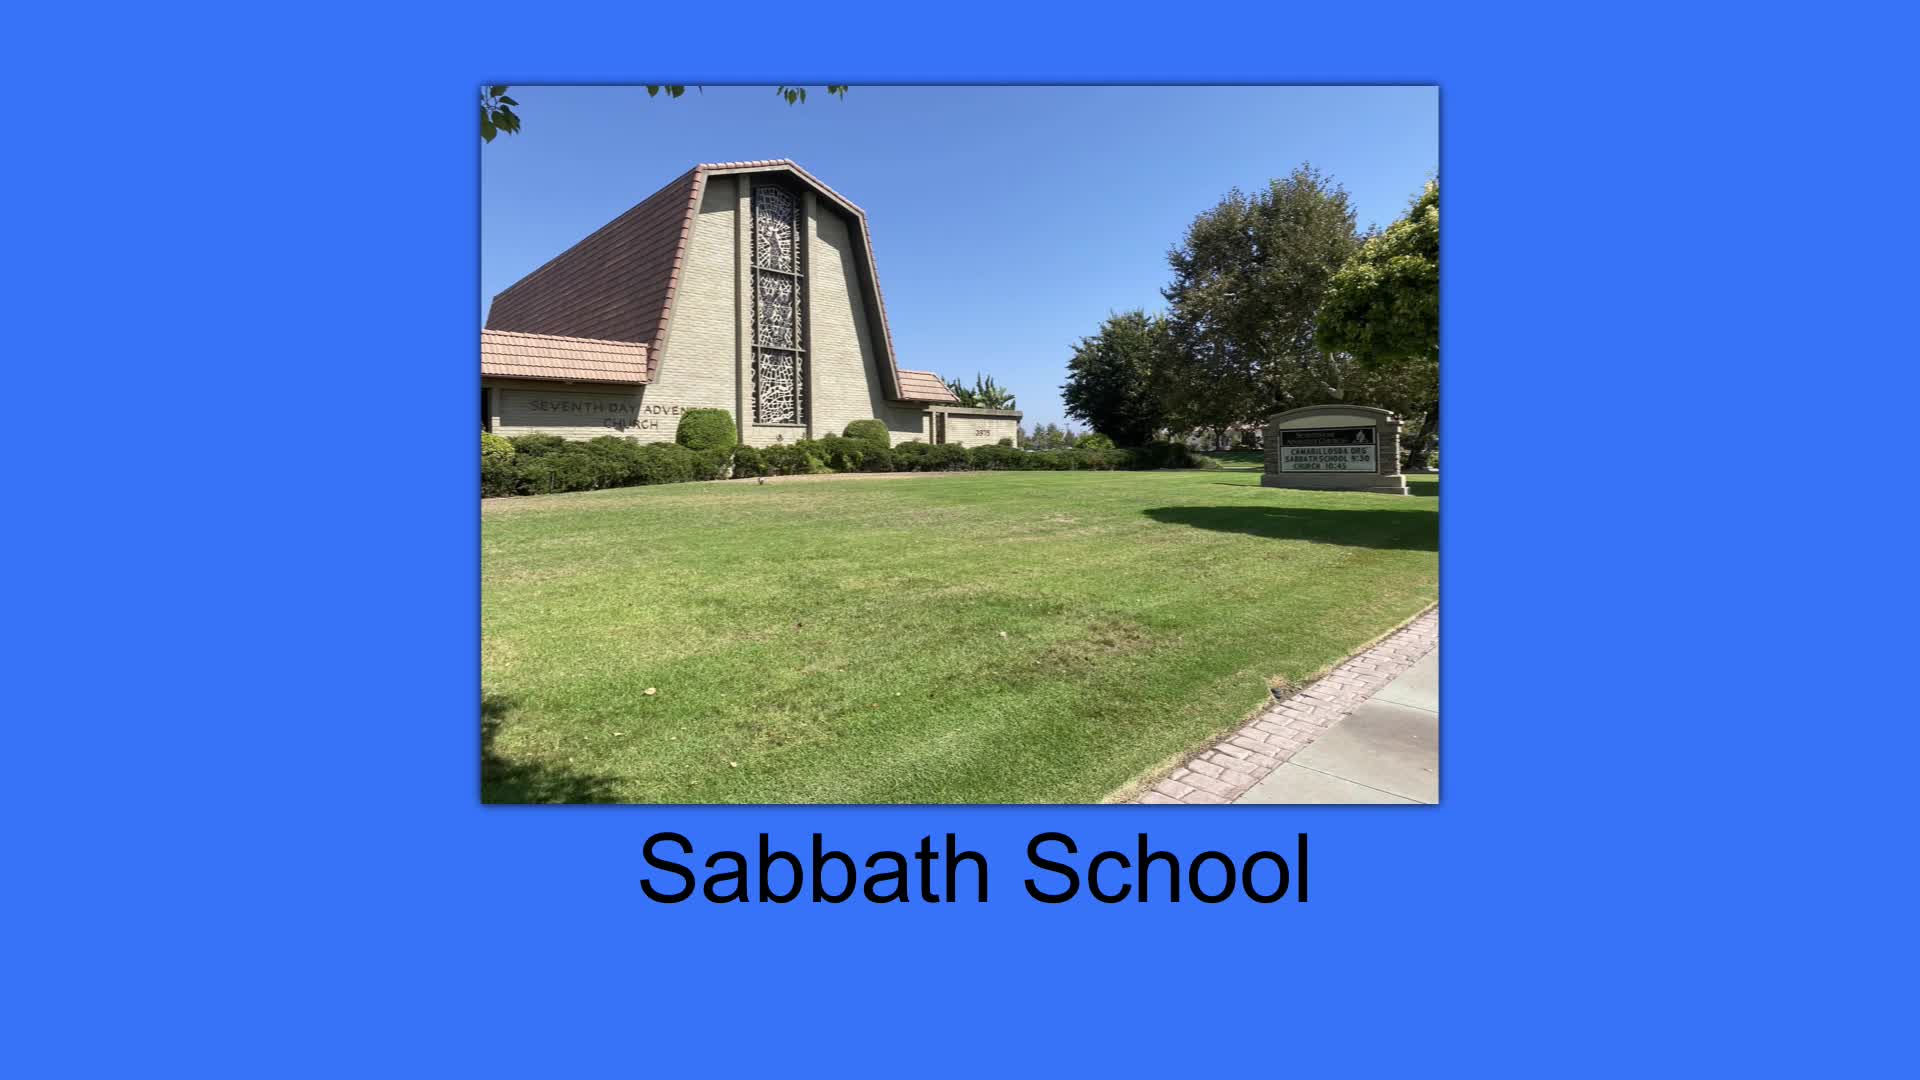 1/30/2021 Sabbath School